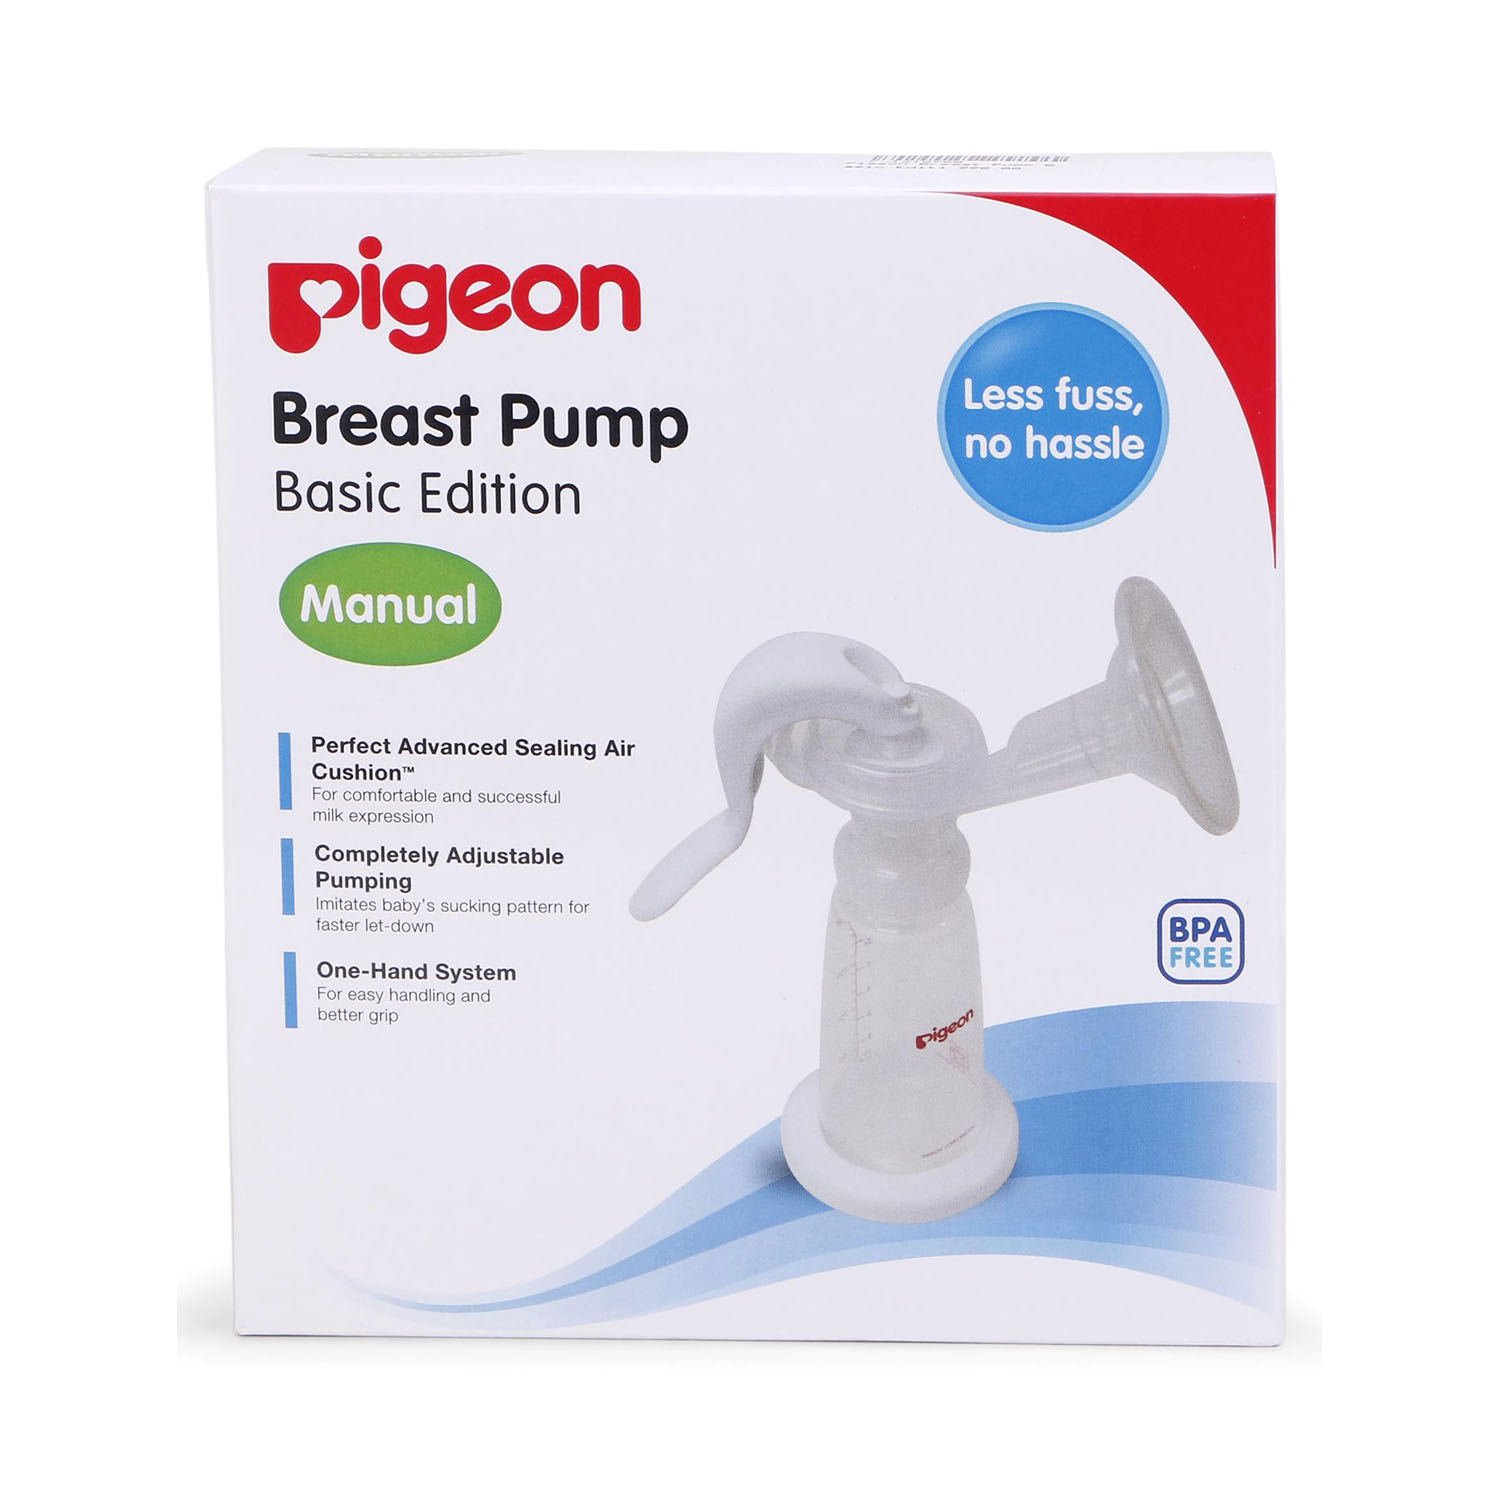 Pigeon Breast Pump Basic Edition Manual